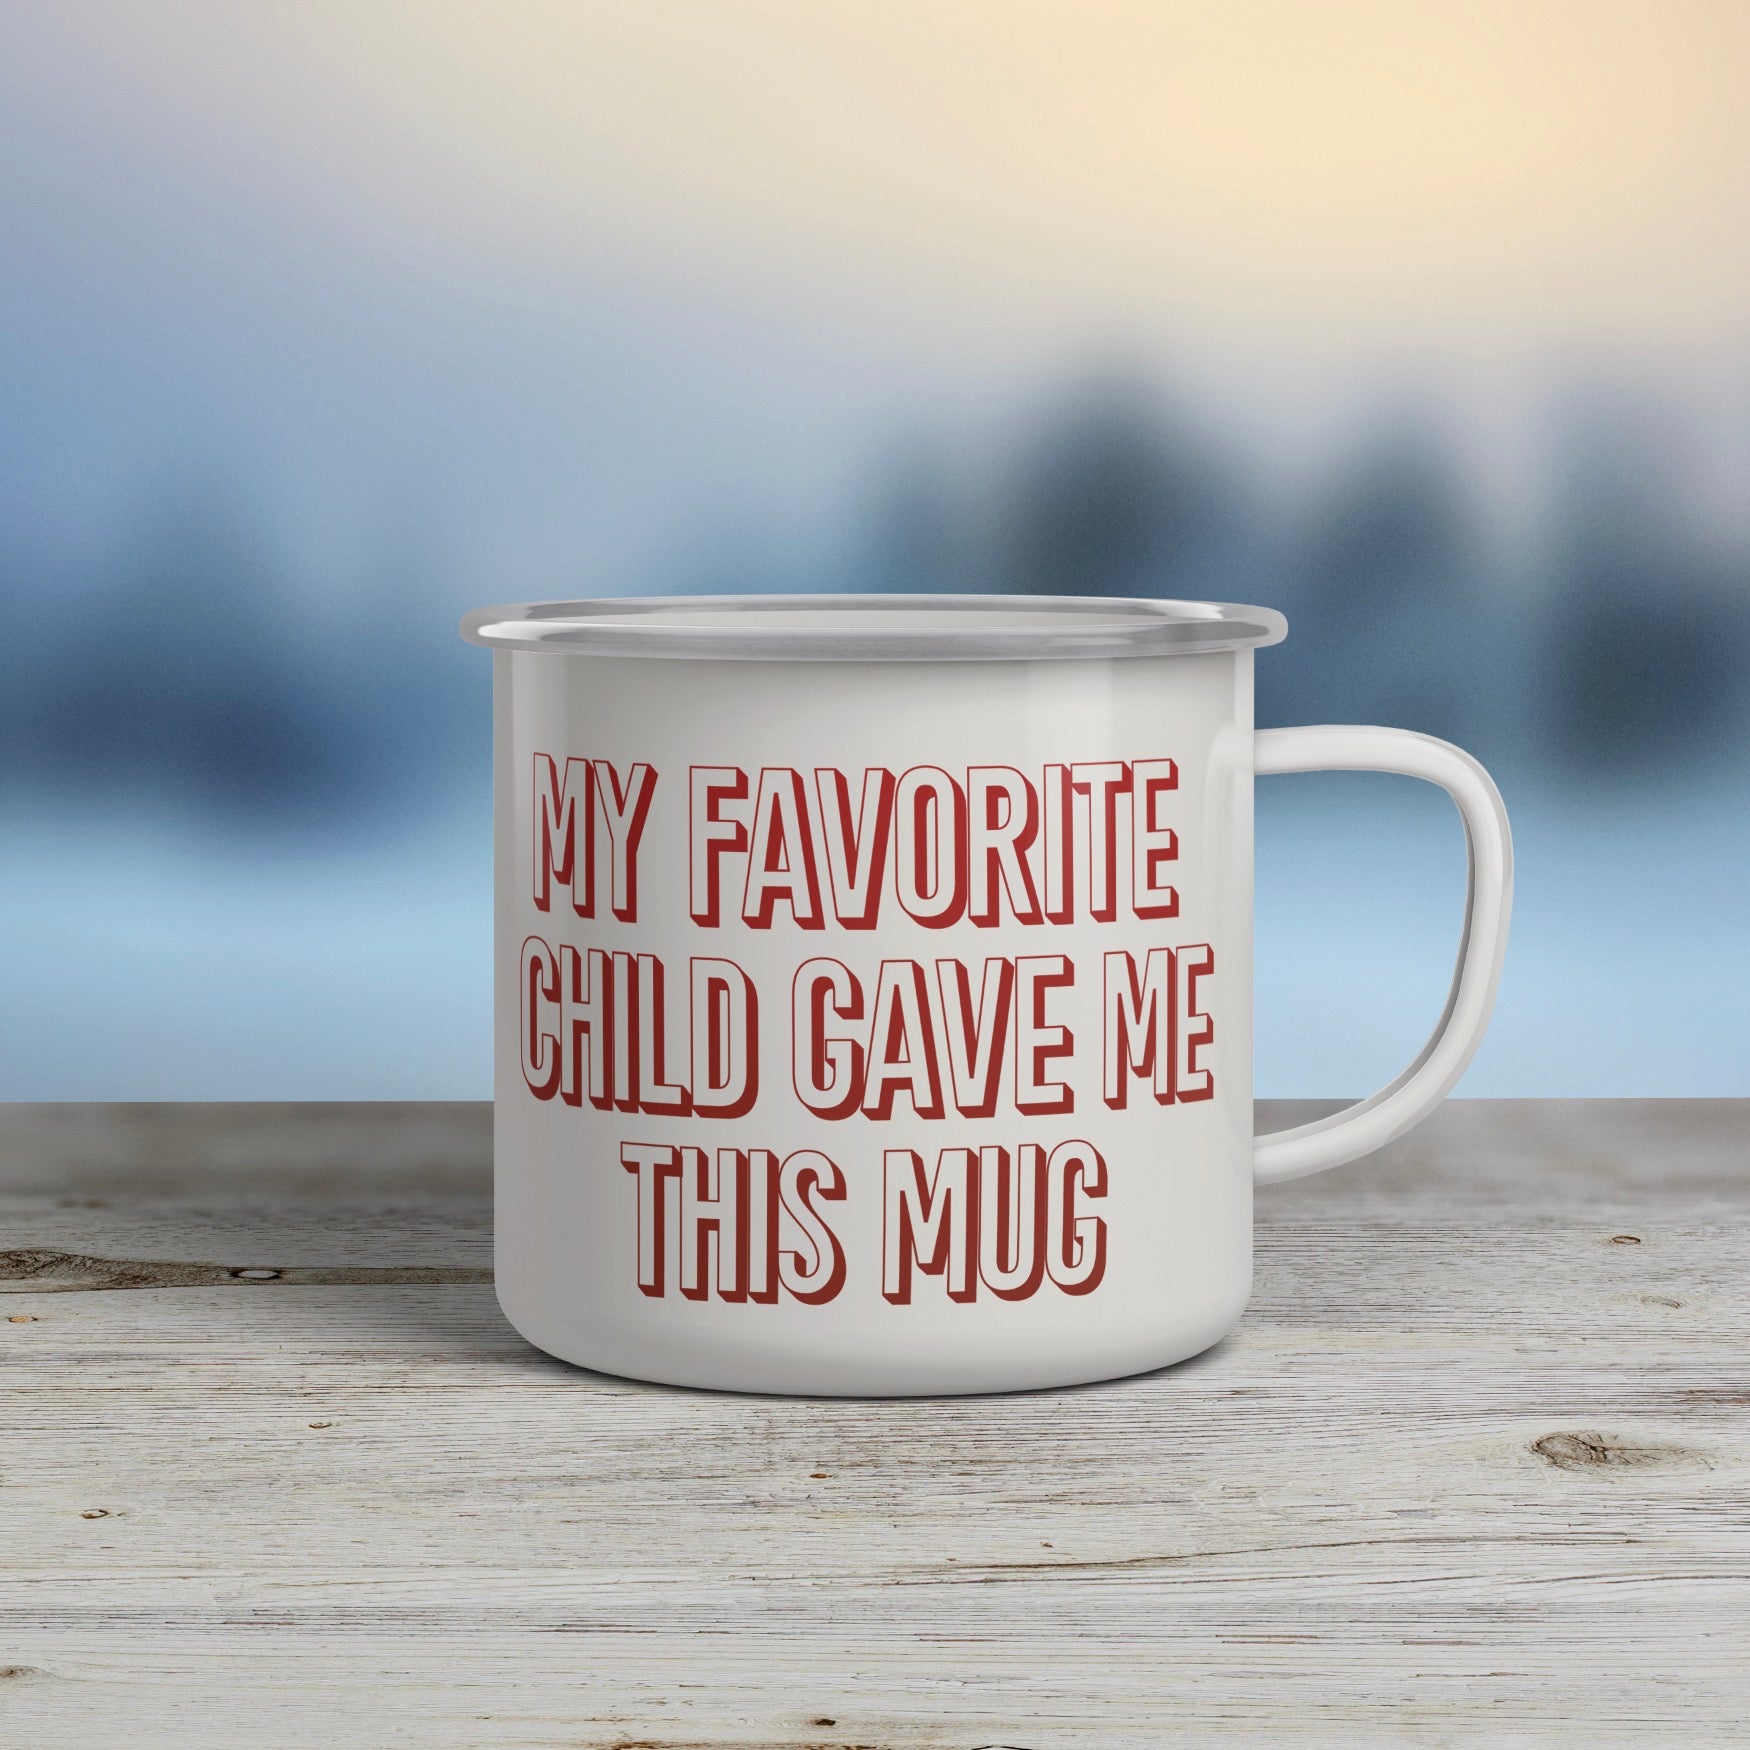 My Favorite Child Gave me this Mug - Emaljmugg